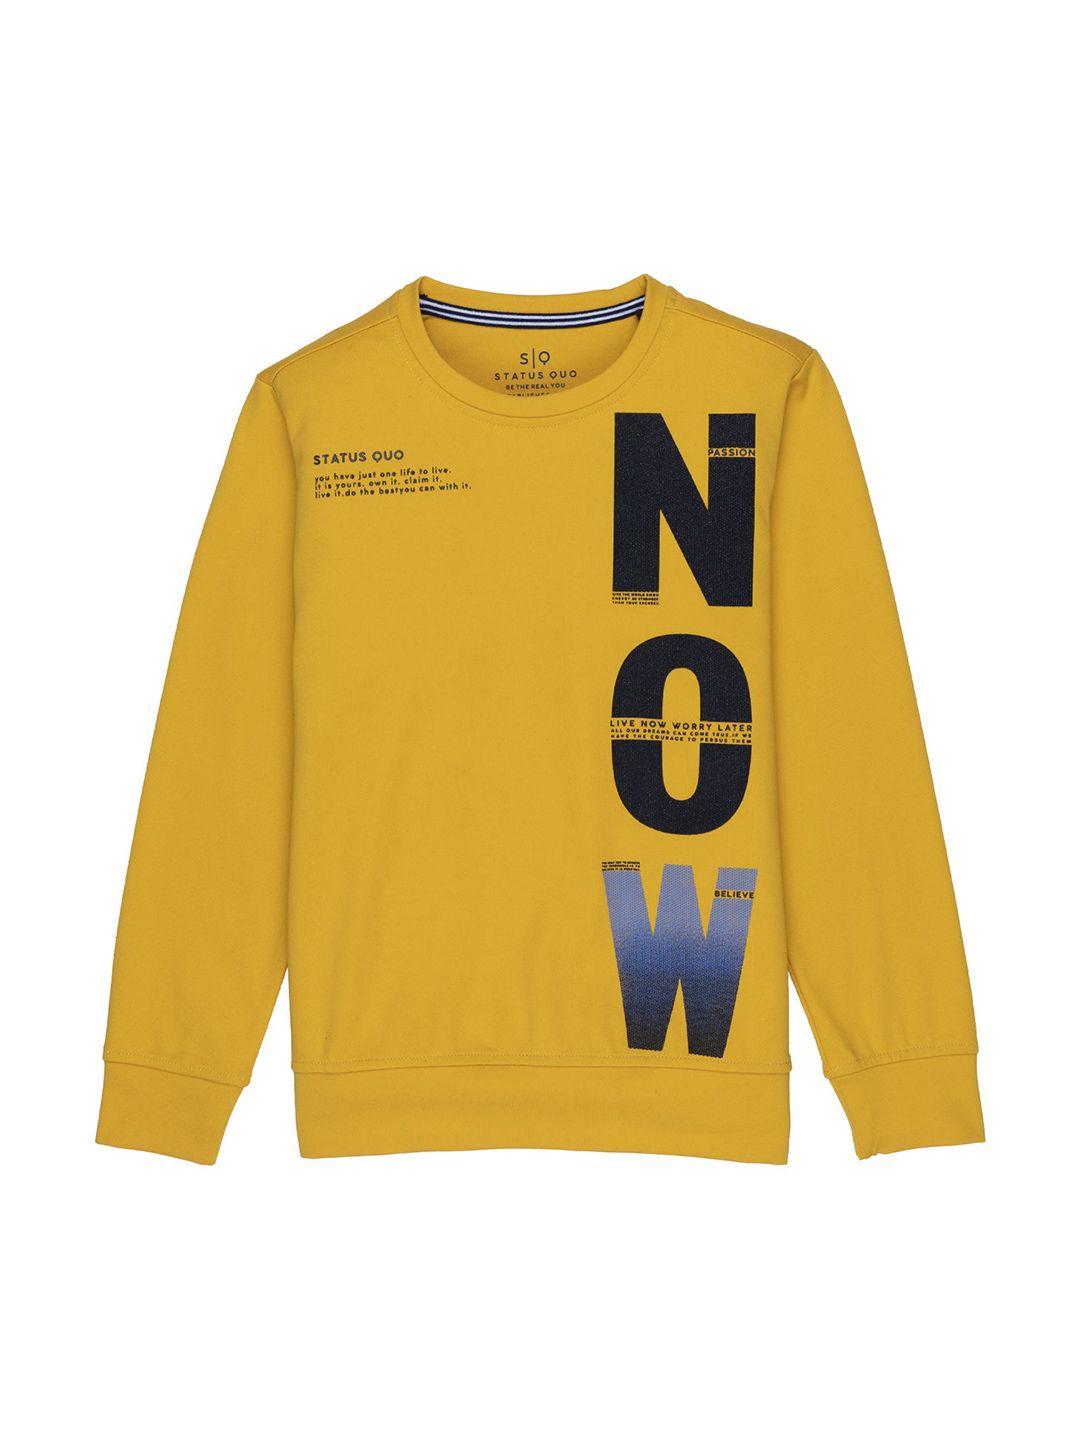 status-quo-boys-gold-toned-printed-sweatshirt